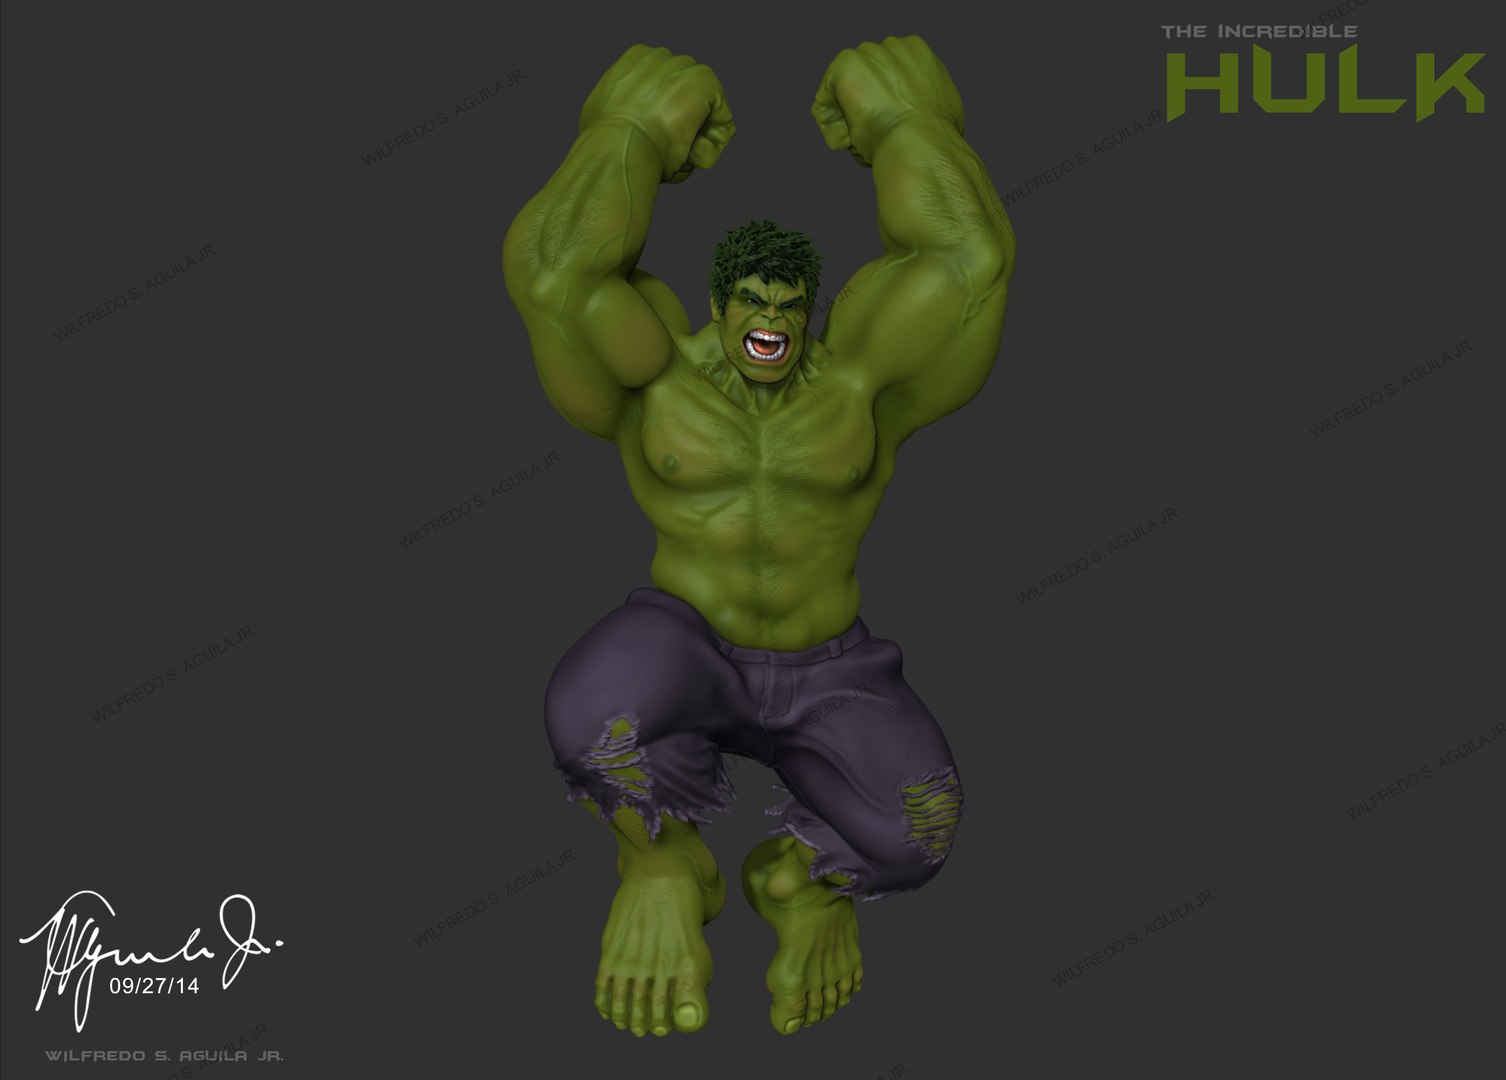 Incredible Hulk Venganza Media Gazette